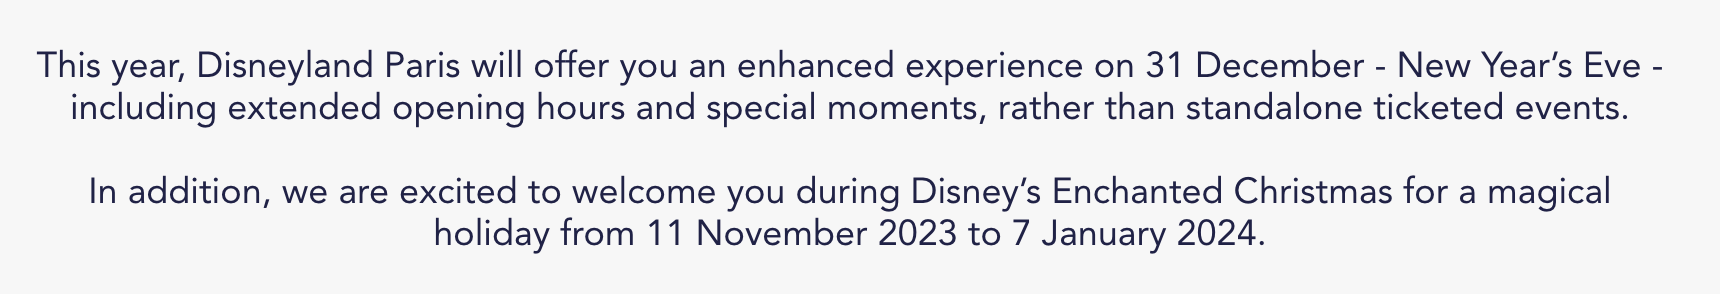 Disneyland Paris Canceled Parties